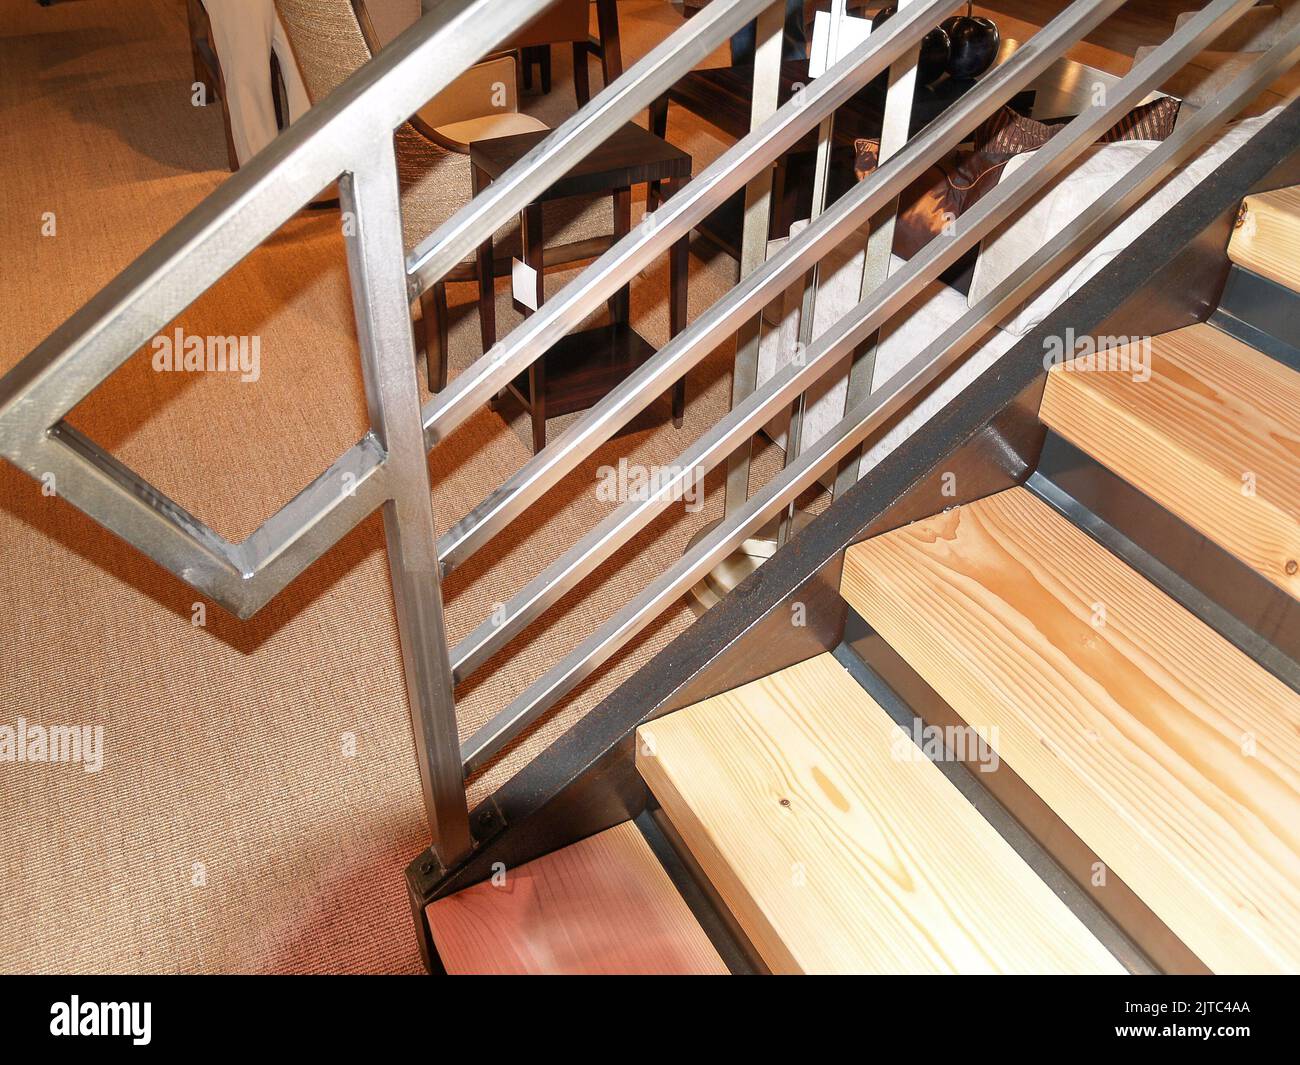 Steel staircase railing trendy design square profile railing elements. Stock Photo